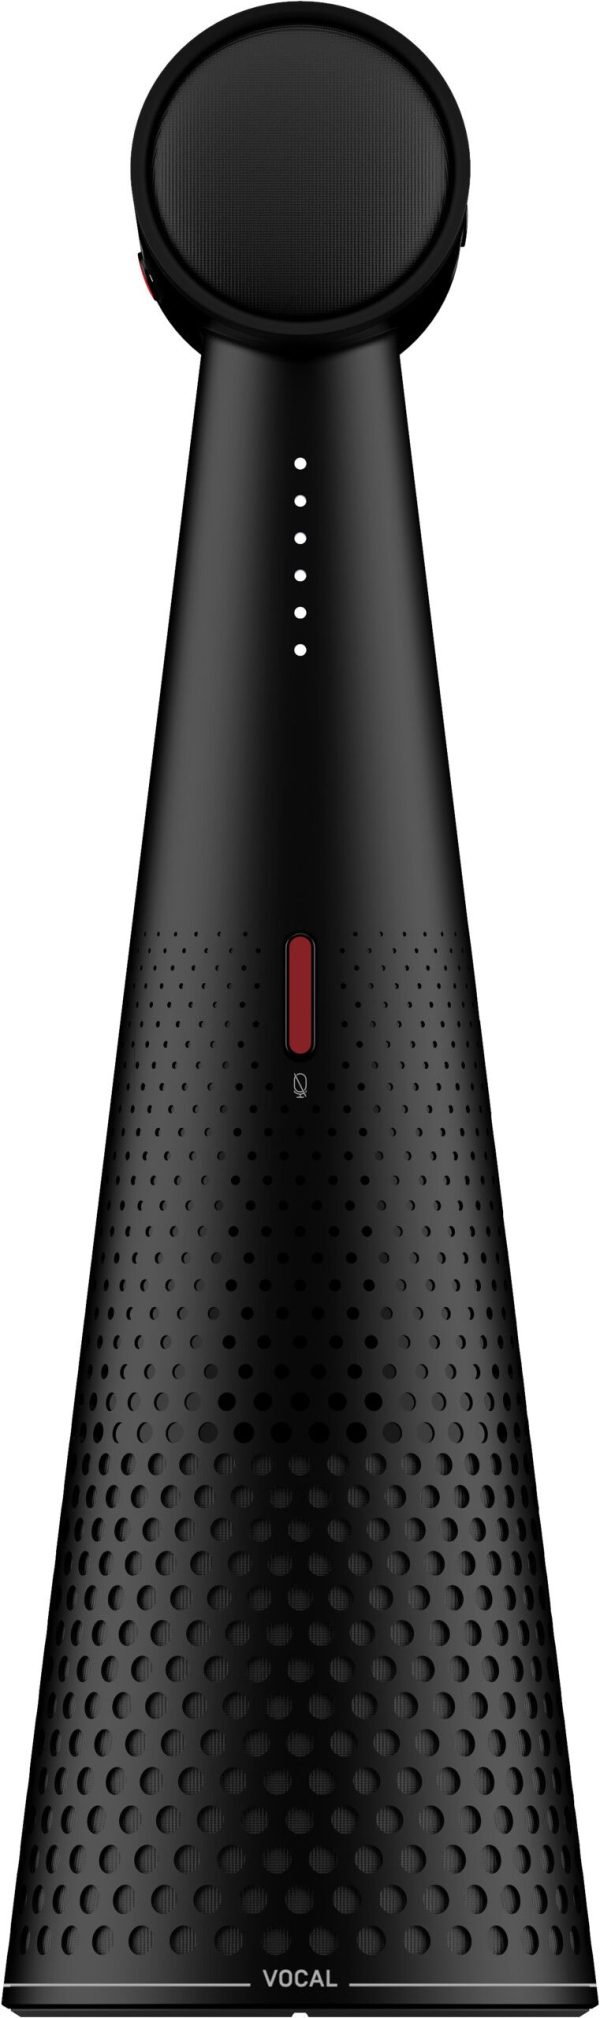 IPEVO Vocal AI Beamforming Bluetooth Speakerphone